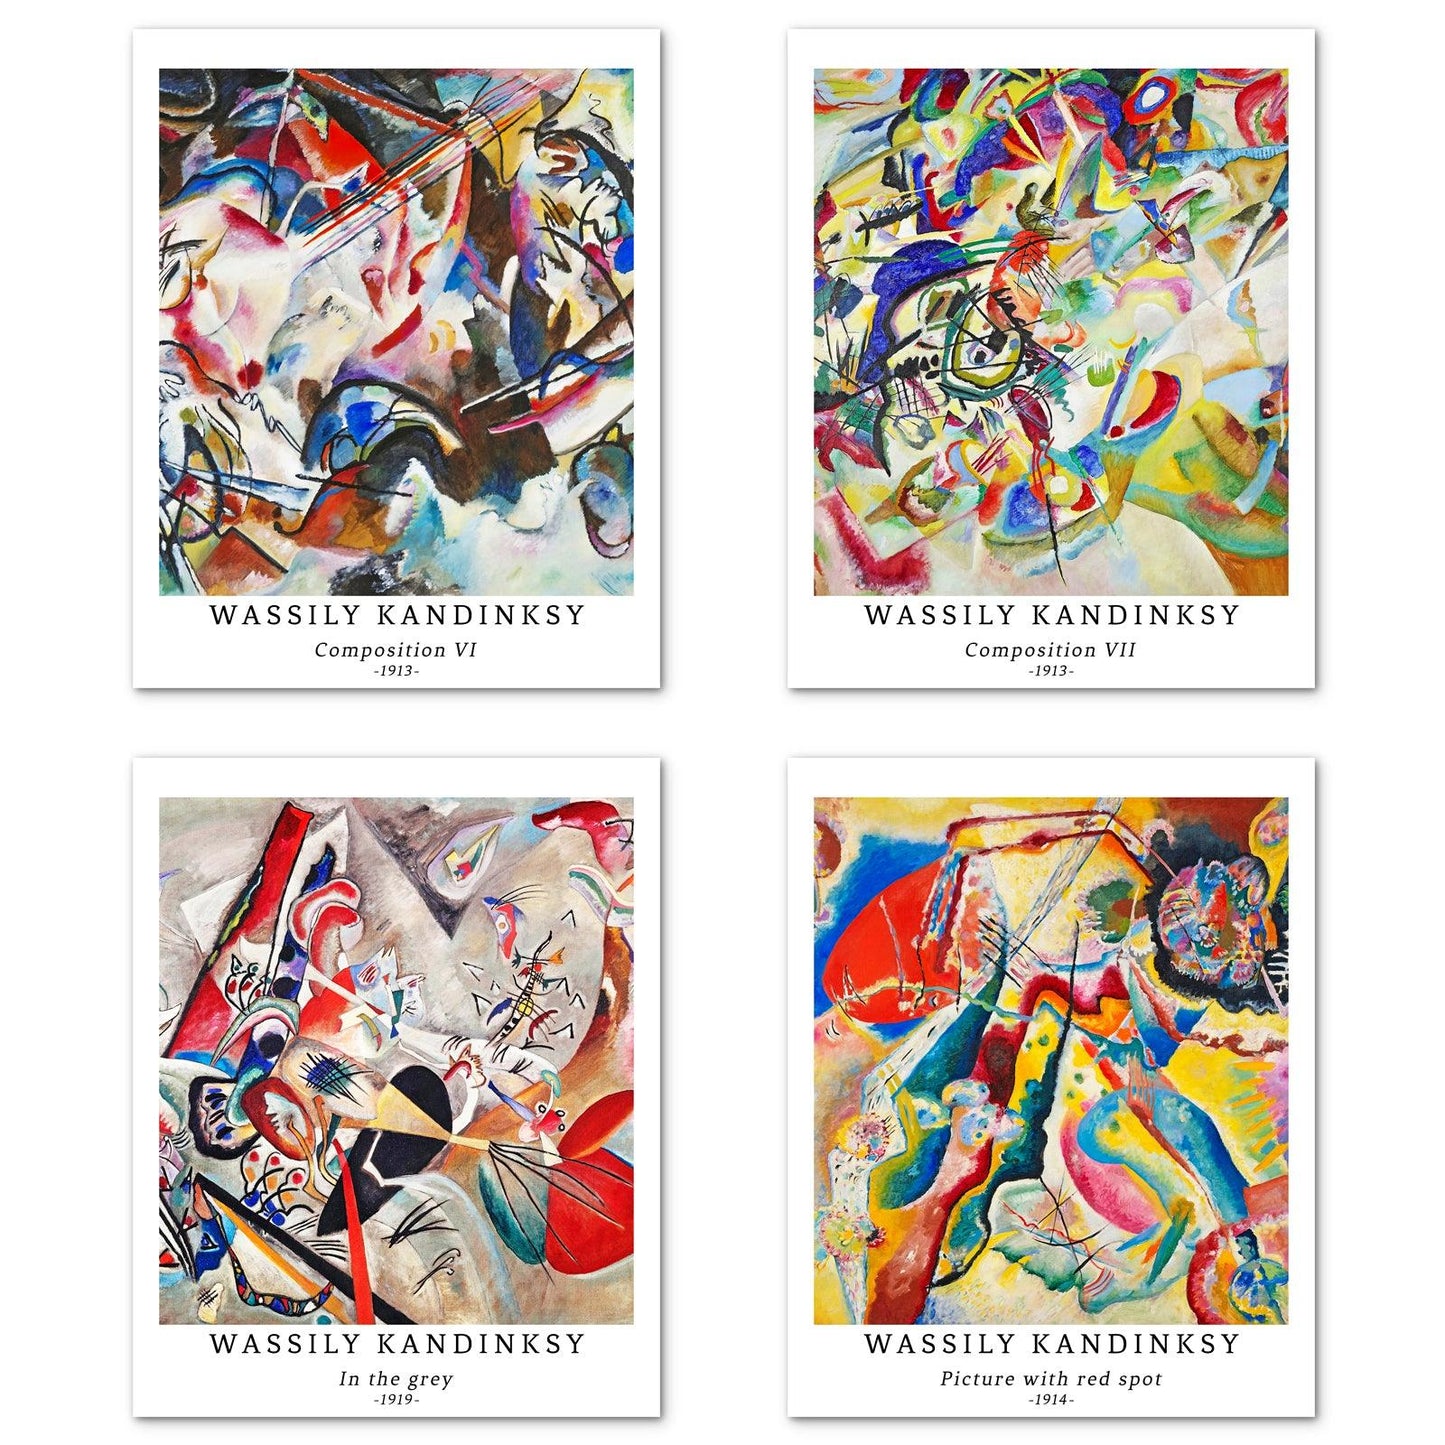 Abstract Geometric Art Paper Giclee Prints Set of 4 (Wassily kandinsky Series) - Berkin Arts